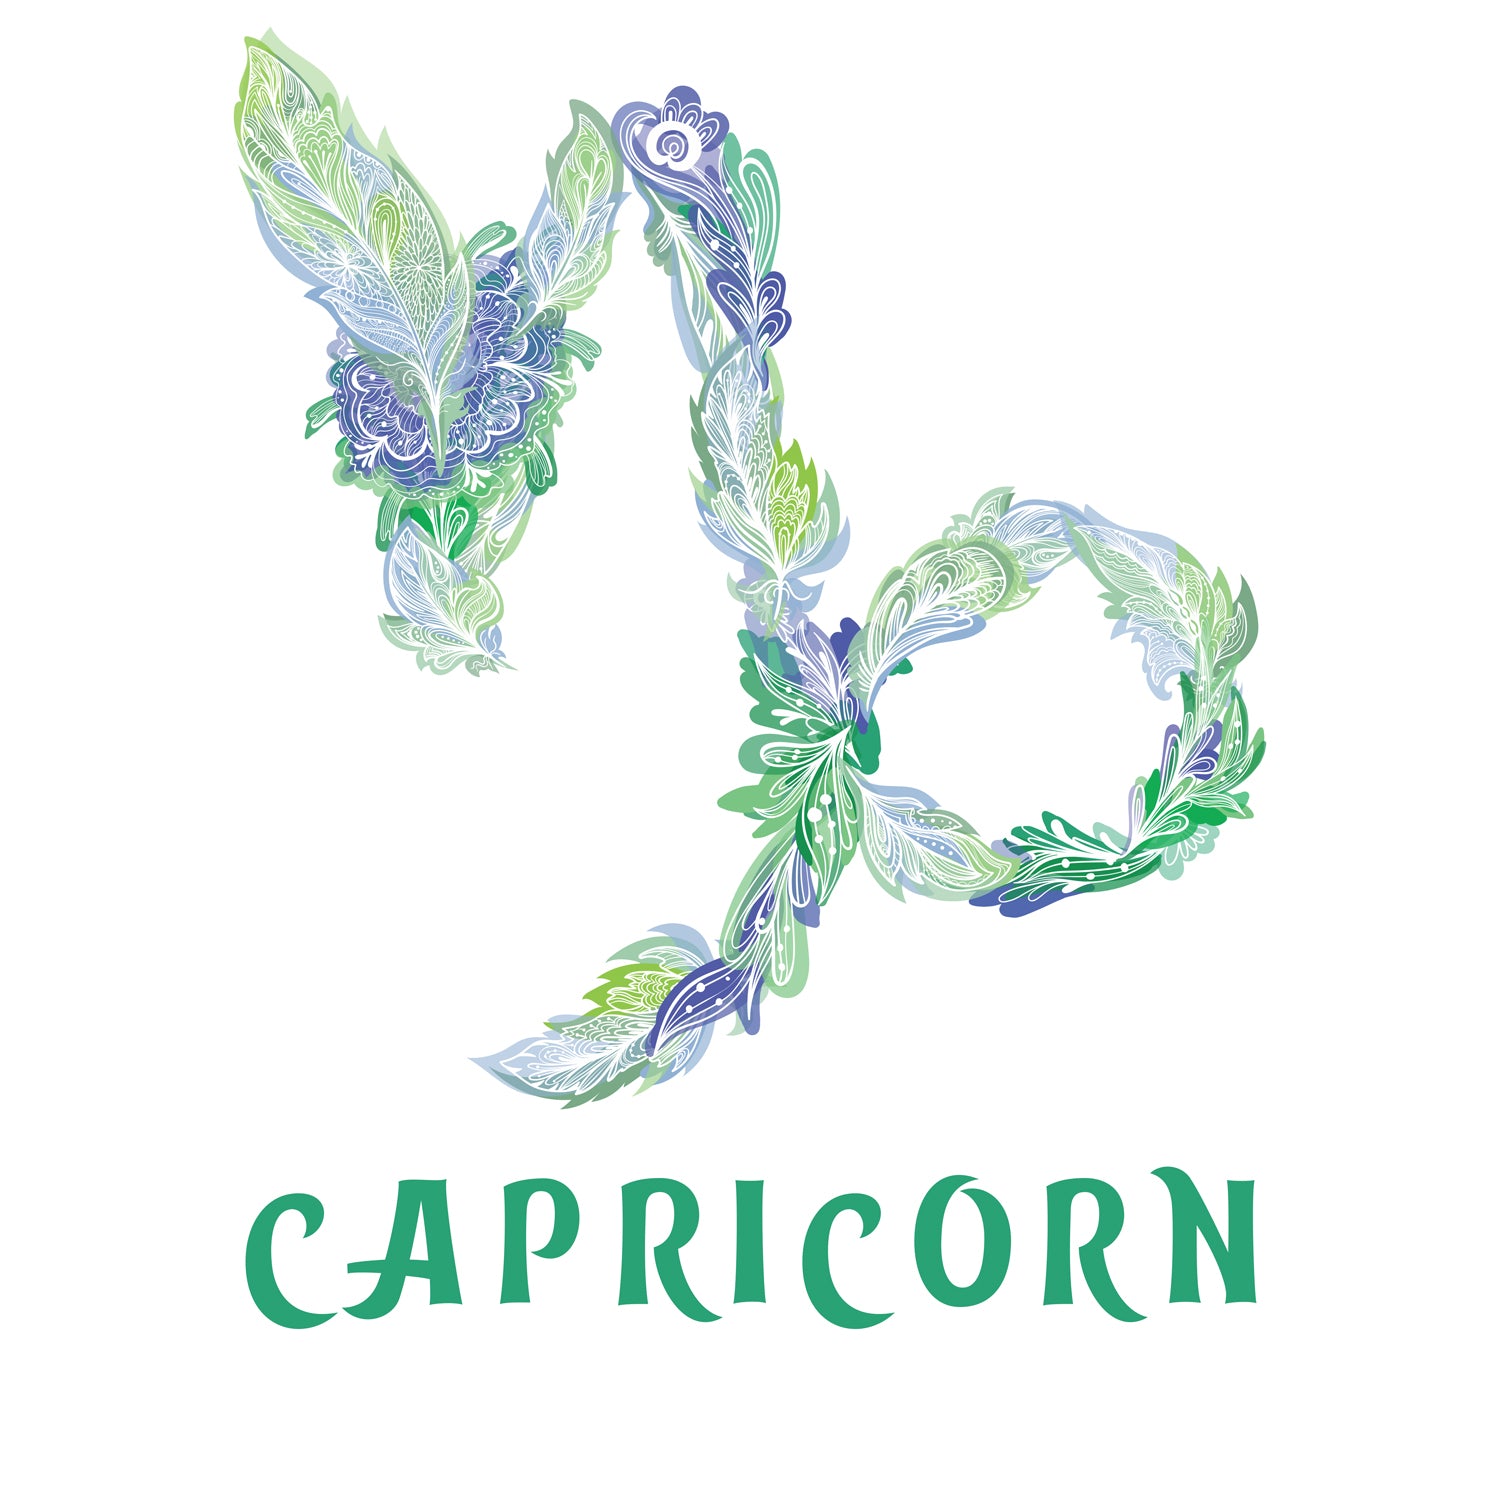 Capricorn Tea